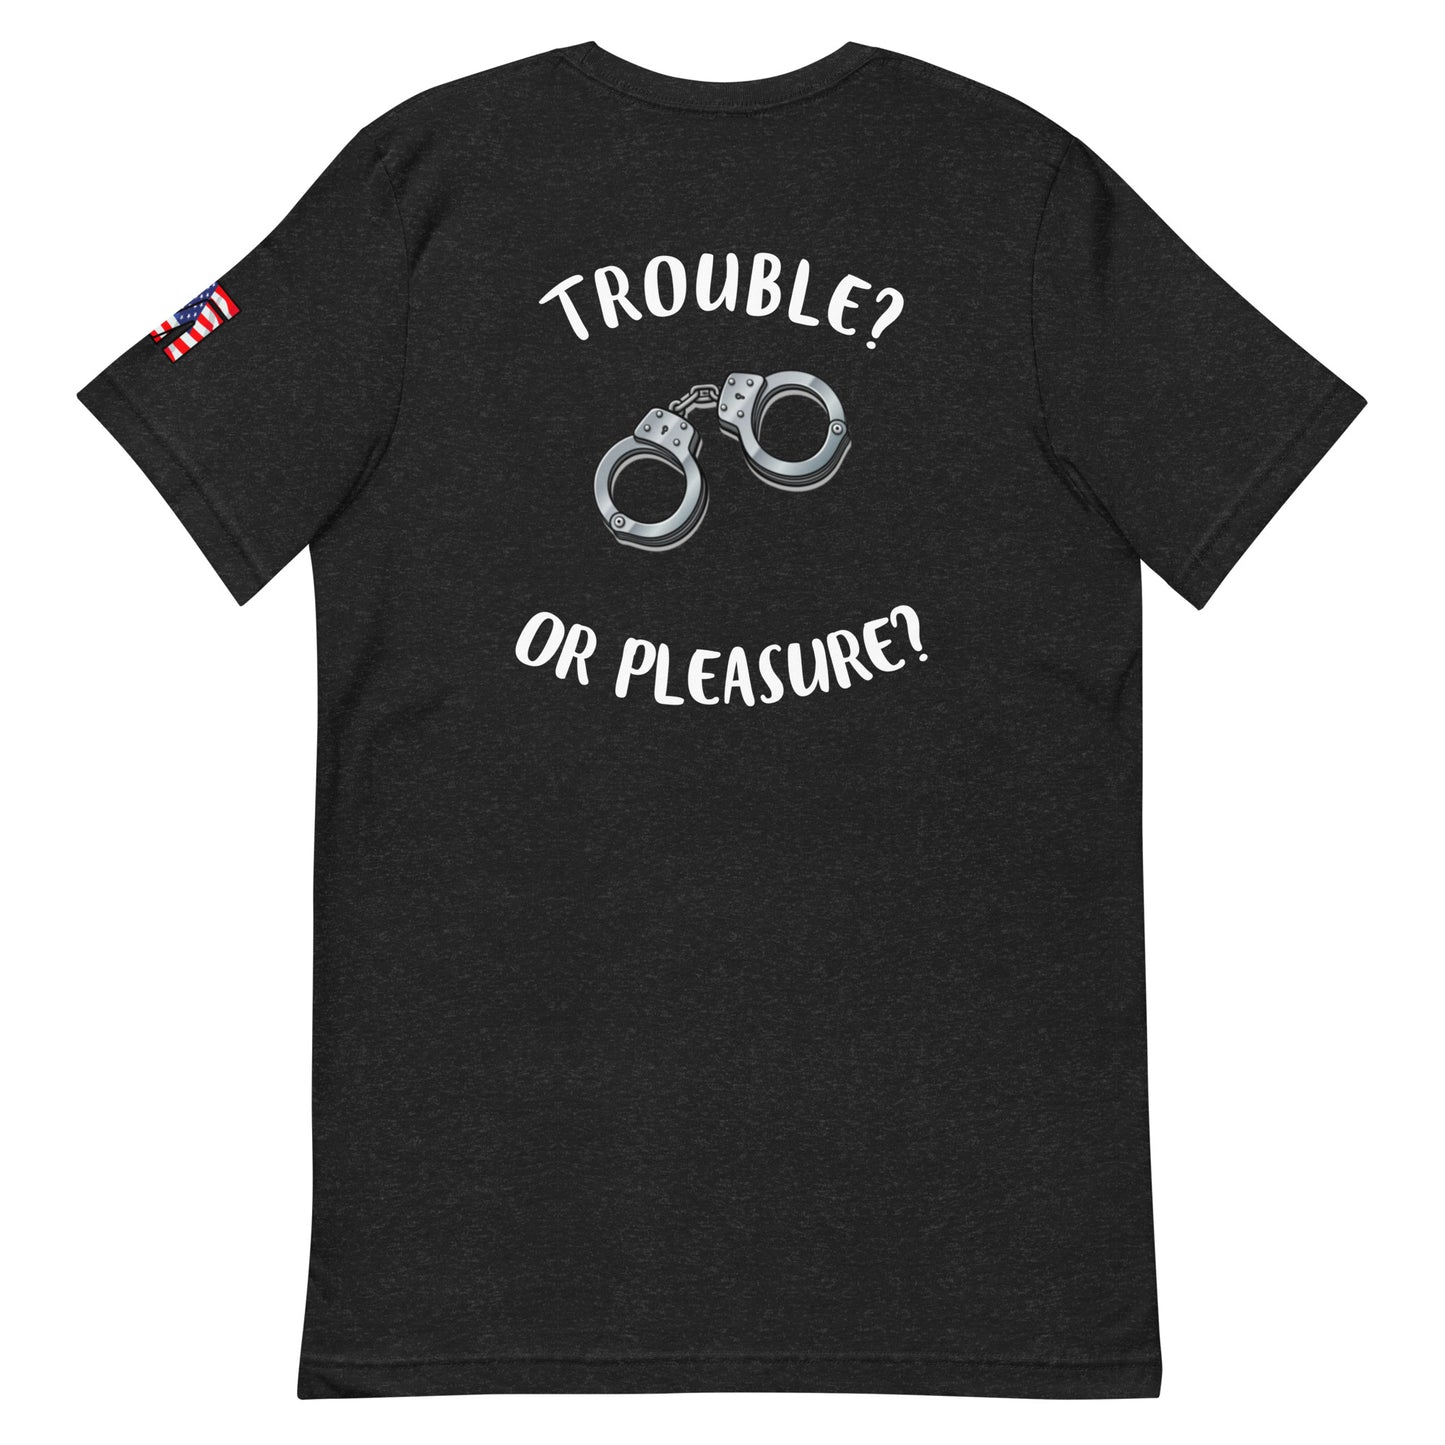 Trouble or Pleasure?